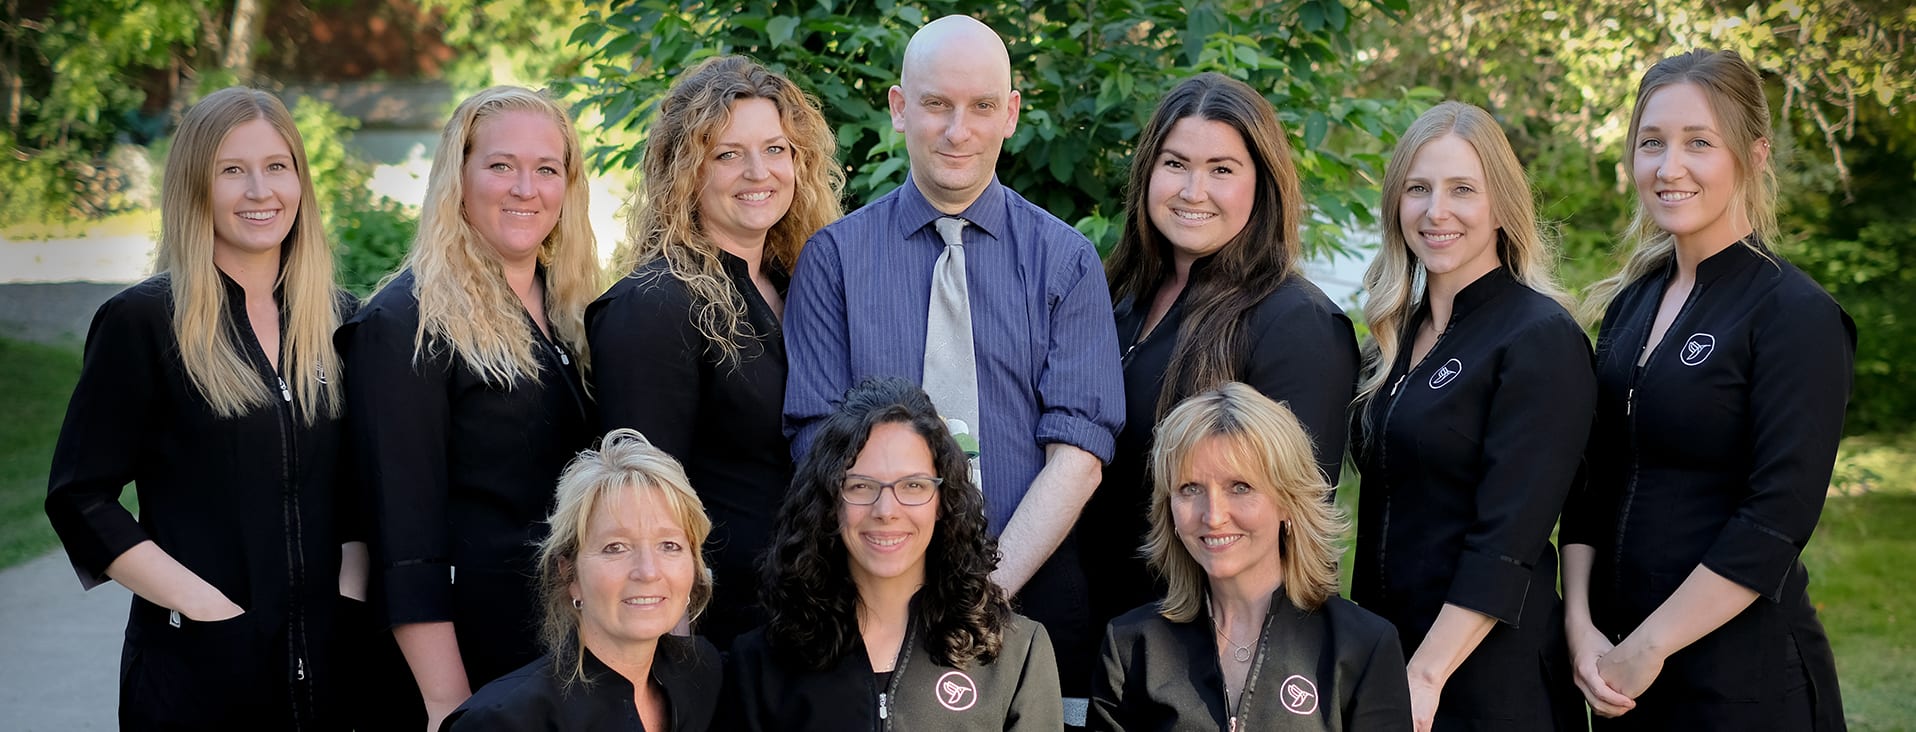 Our Team | Tweed Dental Care